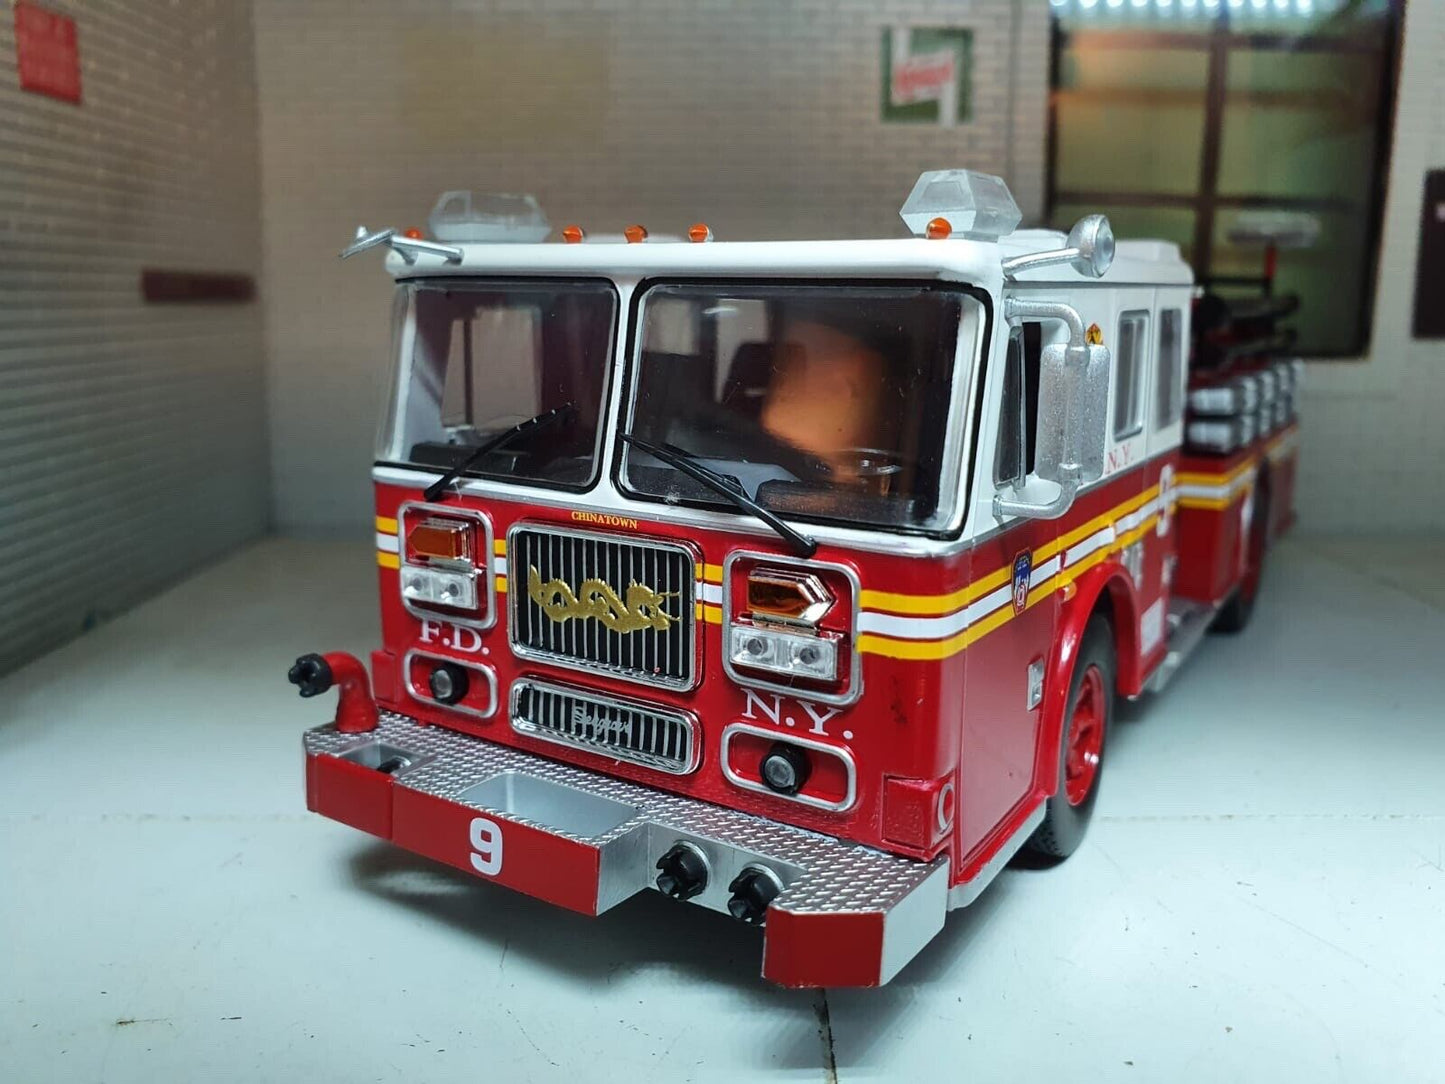 Camion de pompiers de New York FDNY Seagrave Marauder 2 Pumper 1:43